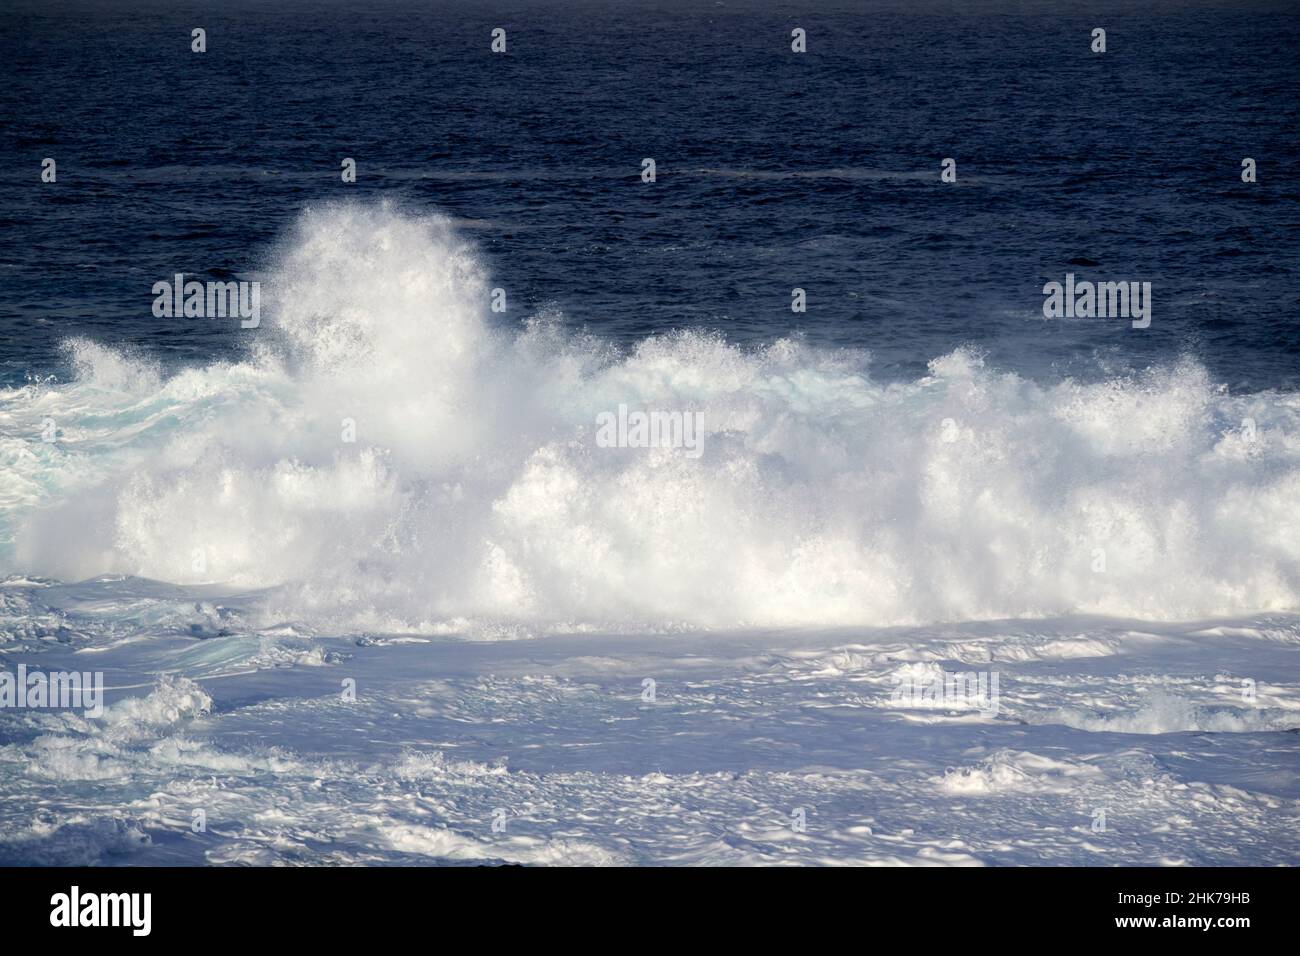 foam and spray from powerful atlantic waves breaking near western shoreline of Punta Pechiguera playa blanca Lanzarote Canary Islands Spain Stock Photo